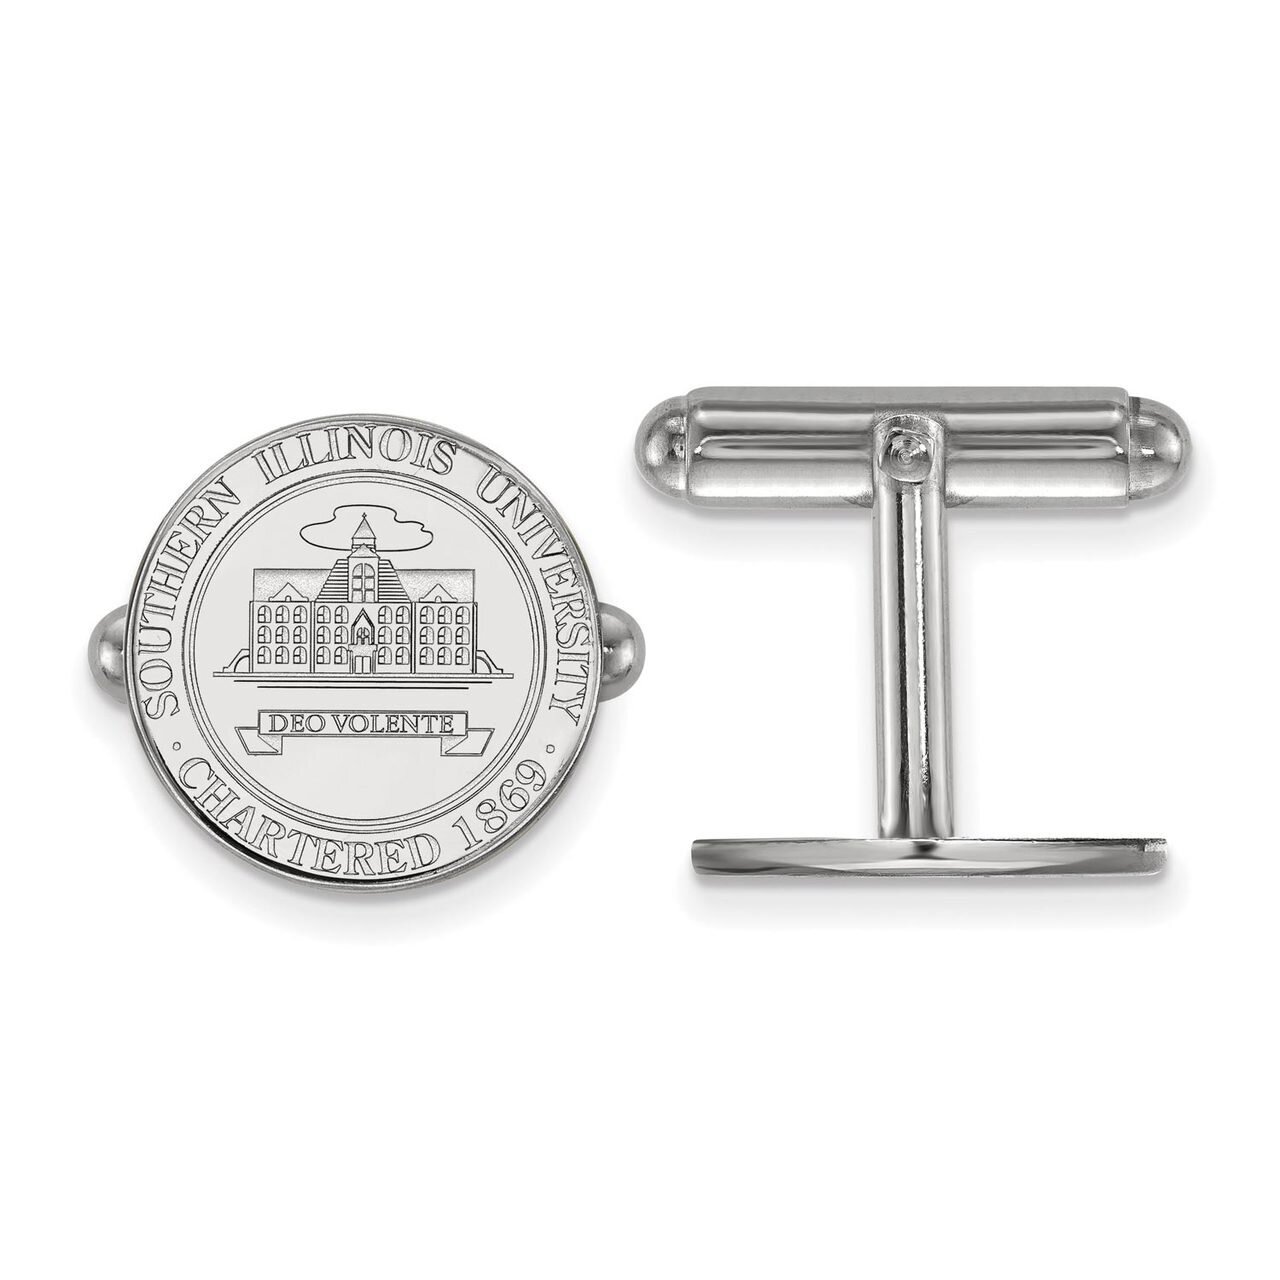 Southern Illinois University Crest Cuff Link Sterling Silver SS023SIU